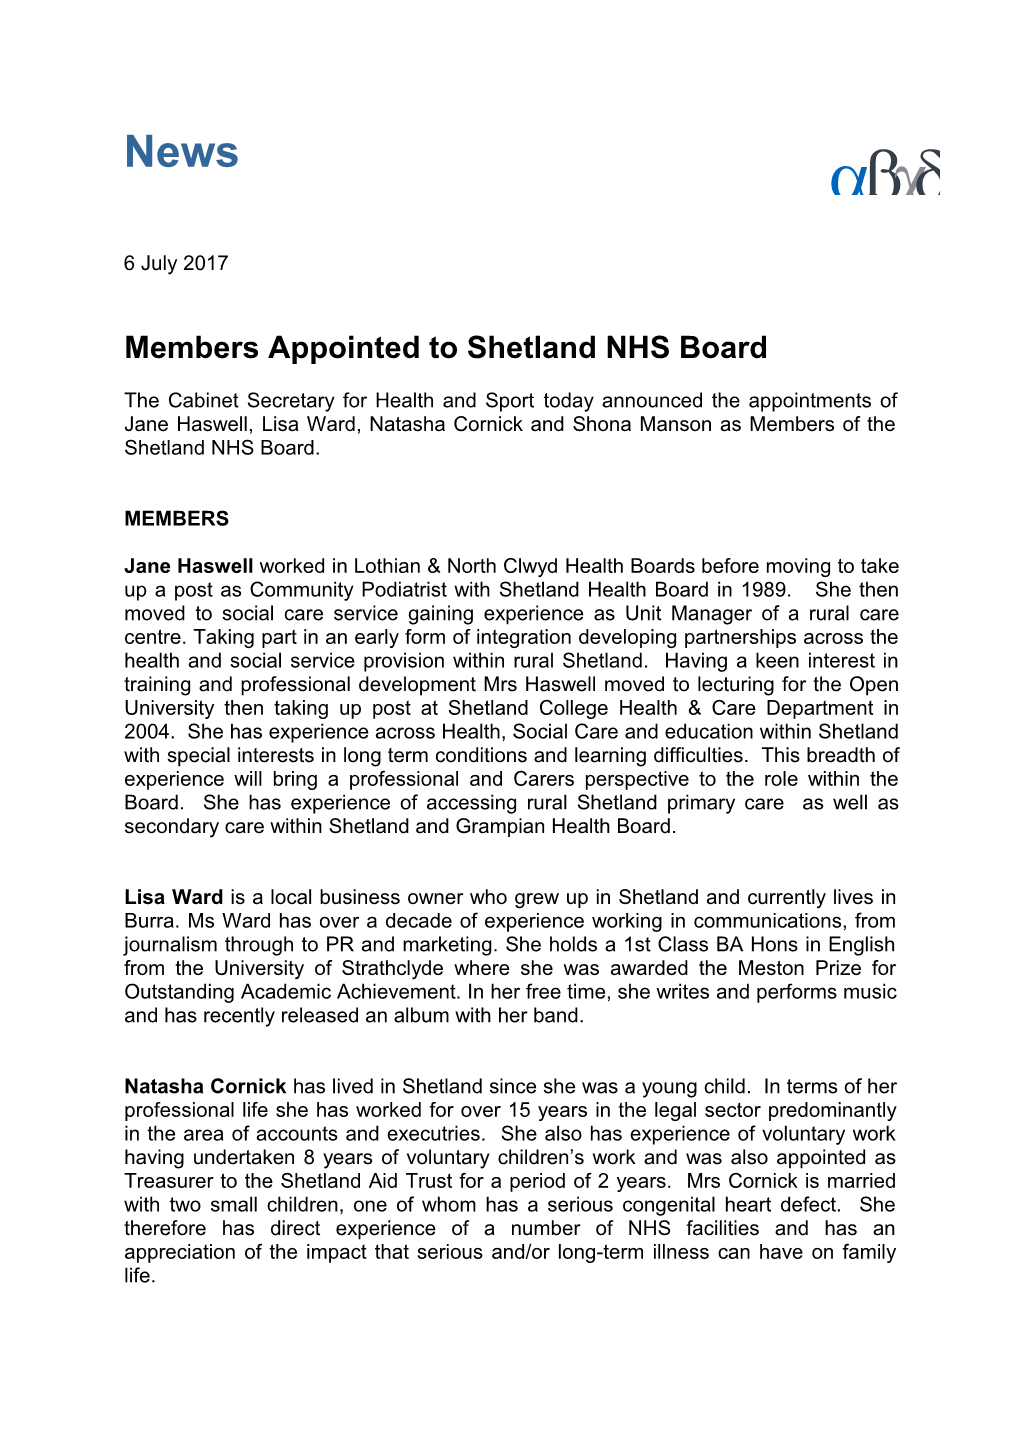 Membersappointed to Shetland NHS Board